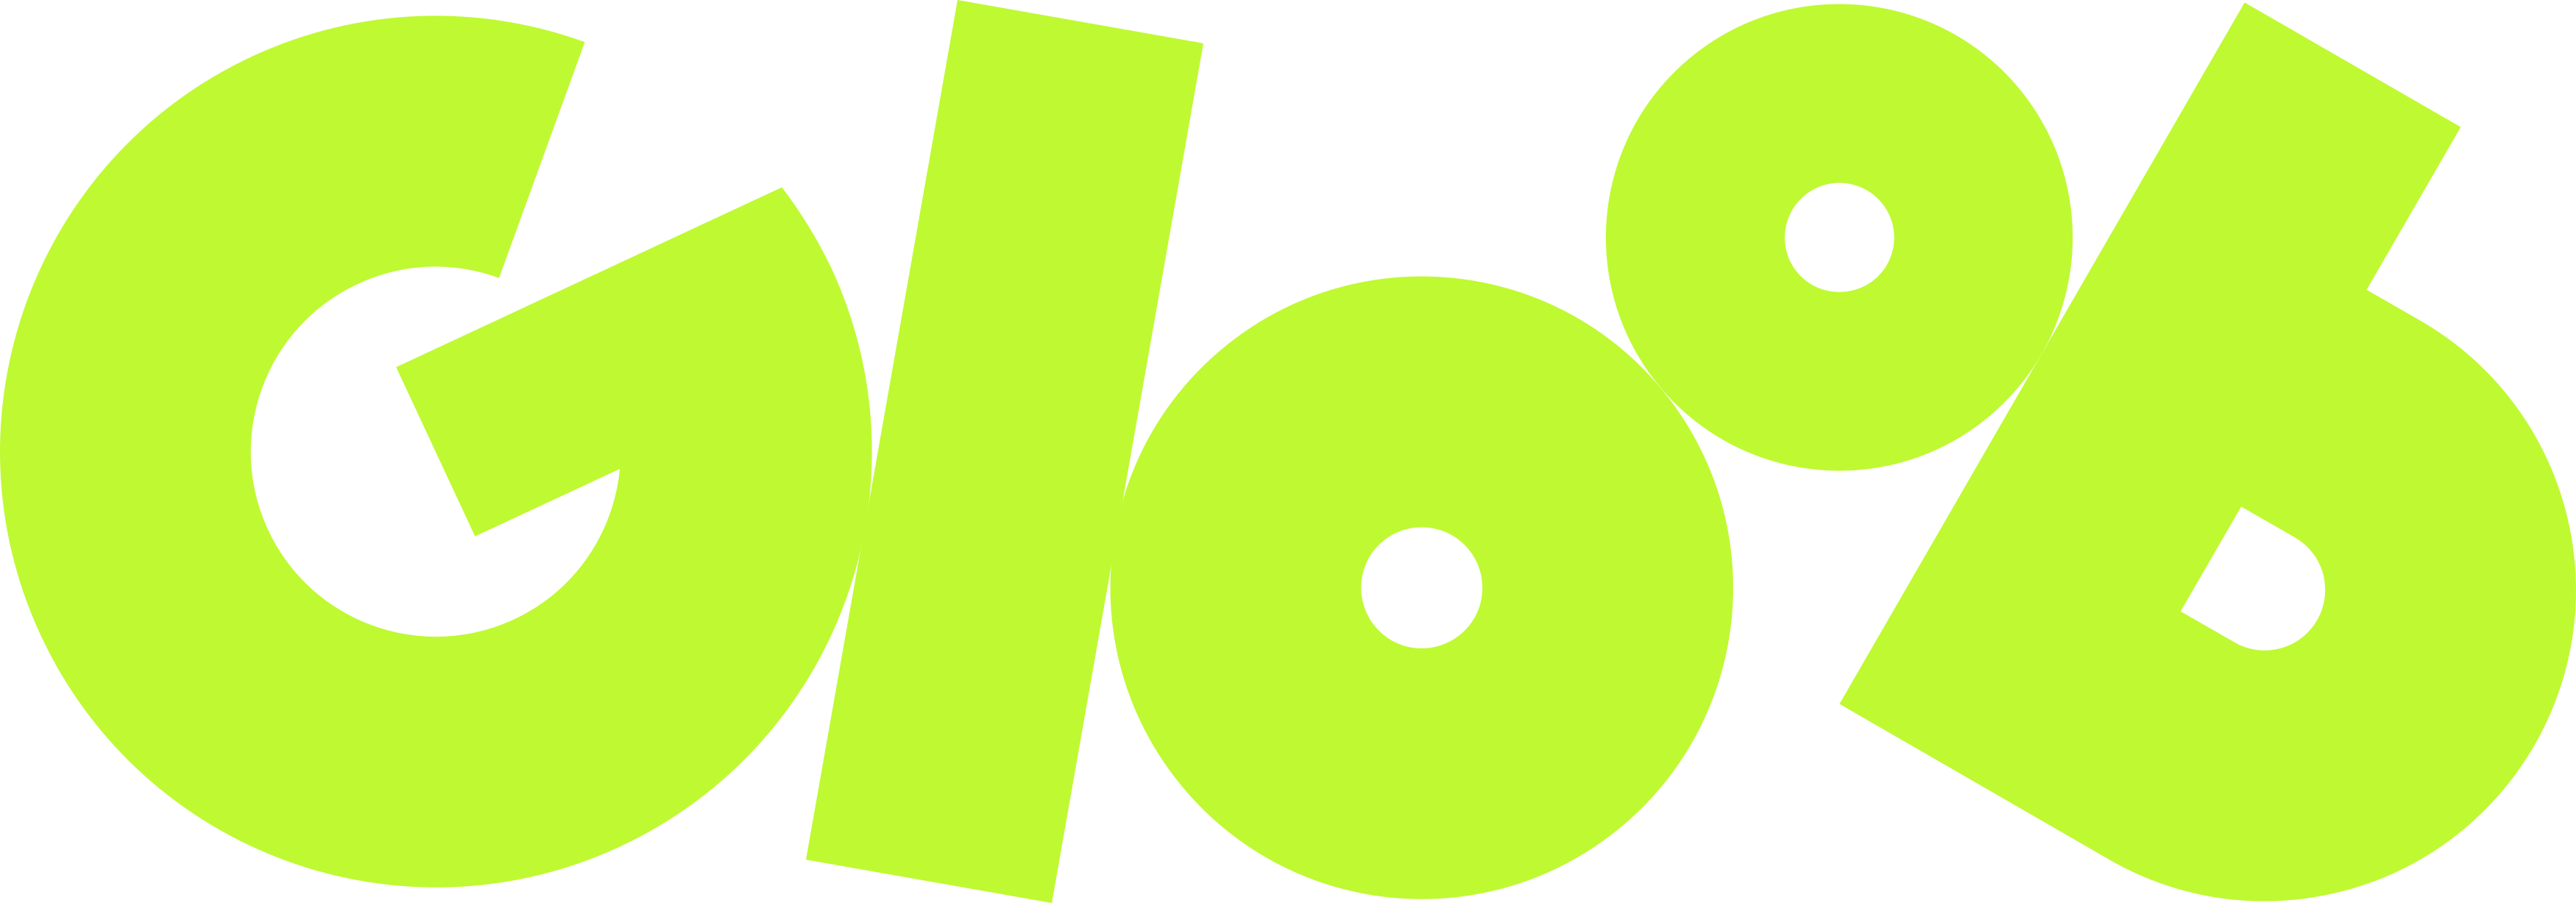 Gloob Logo - Canal Gloob Logo - PNG e Vetor - Download de Logotipos